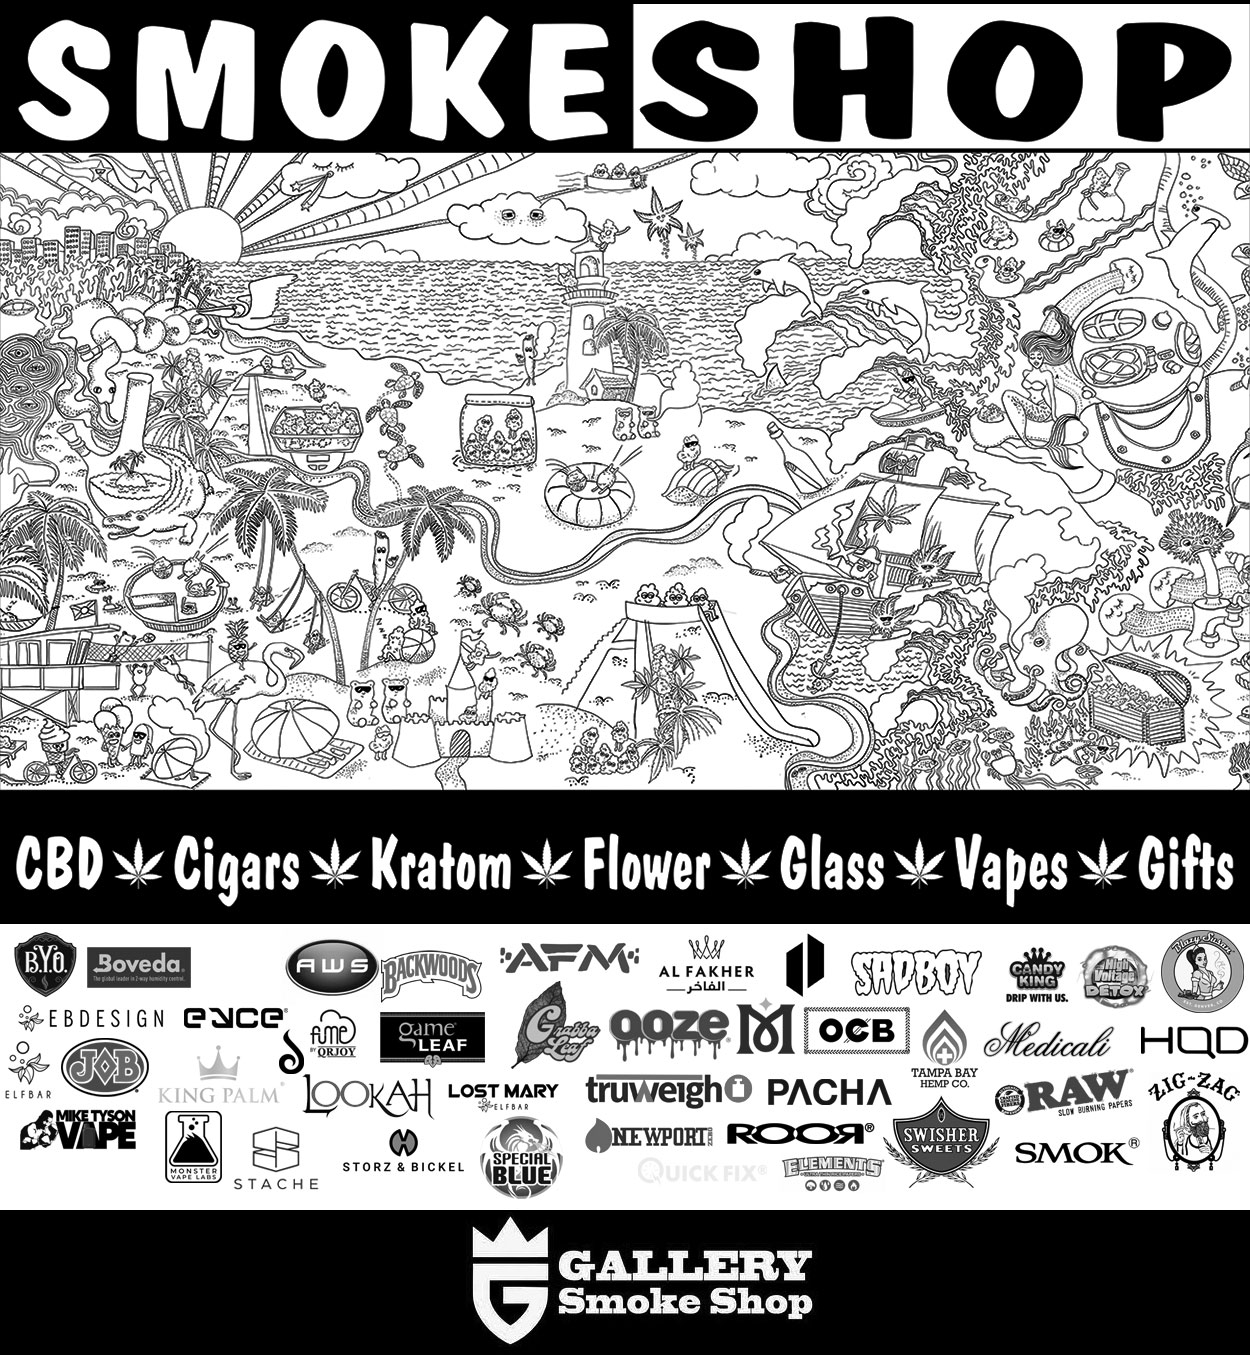 Gallery Smoke Shop